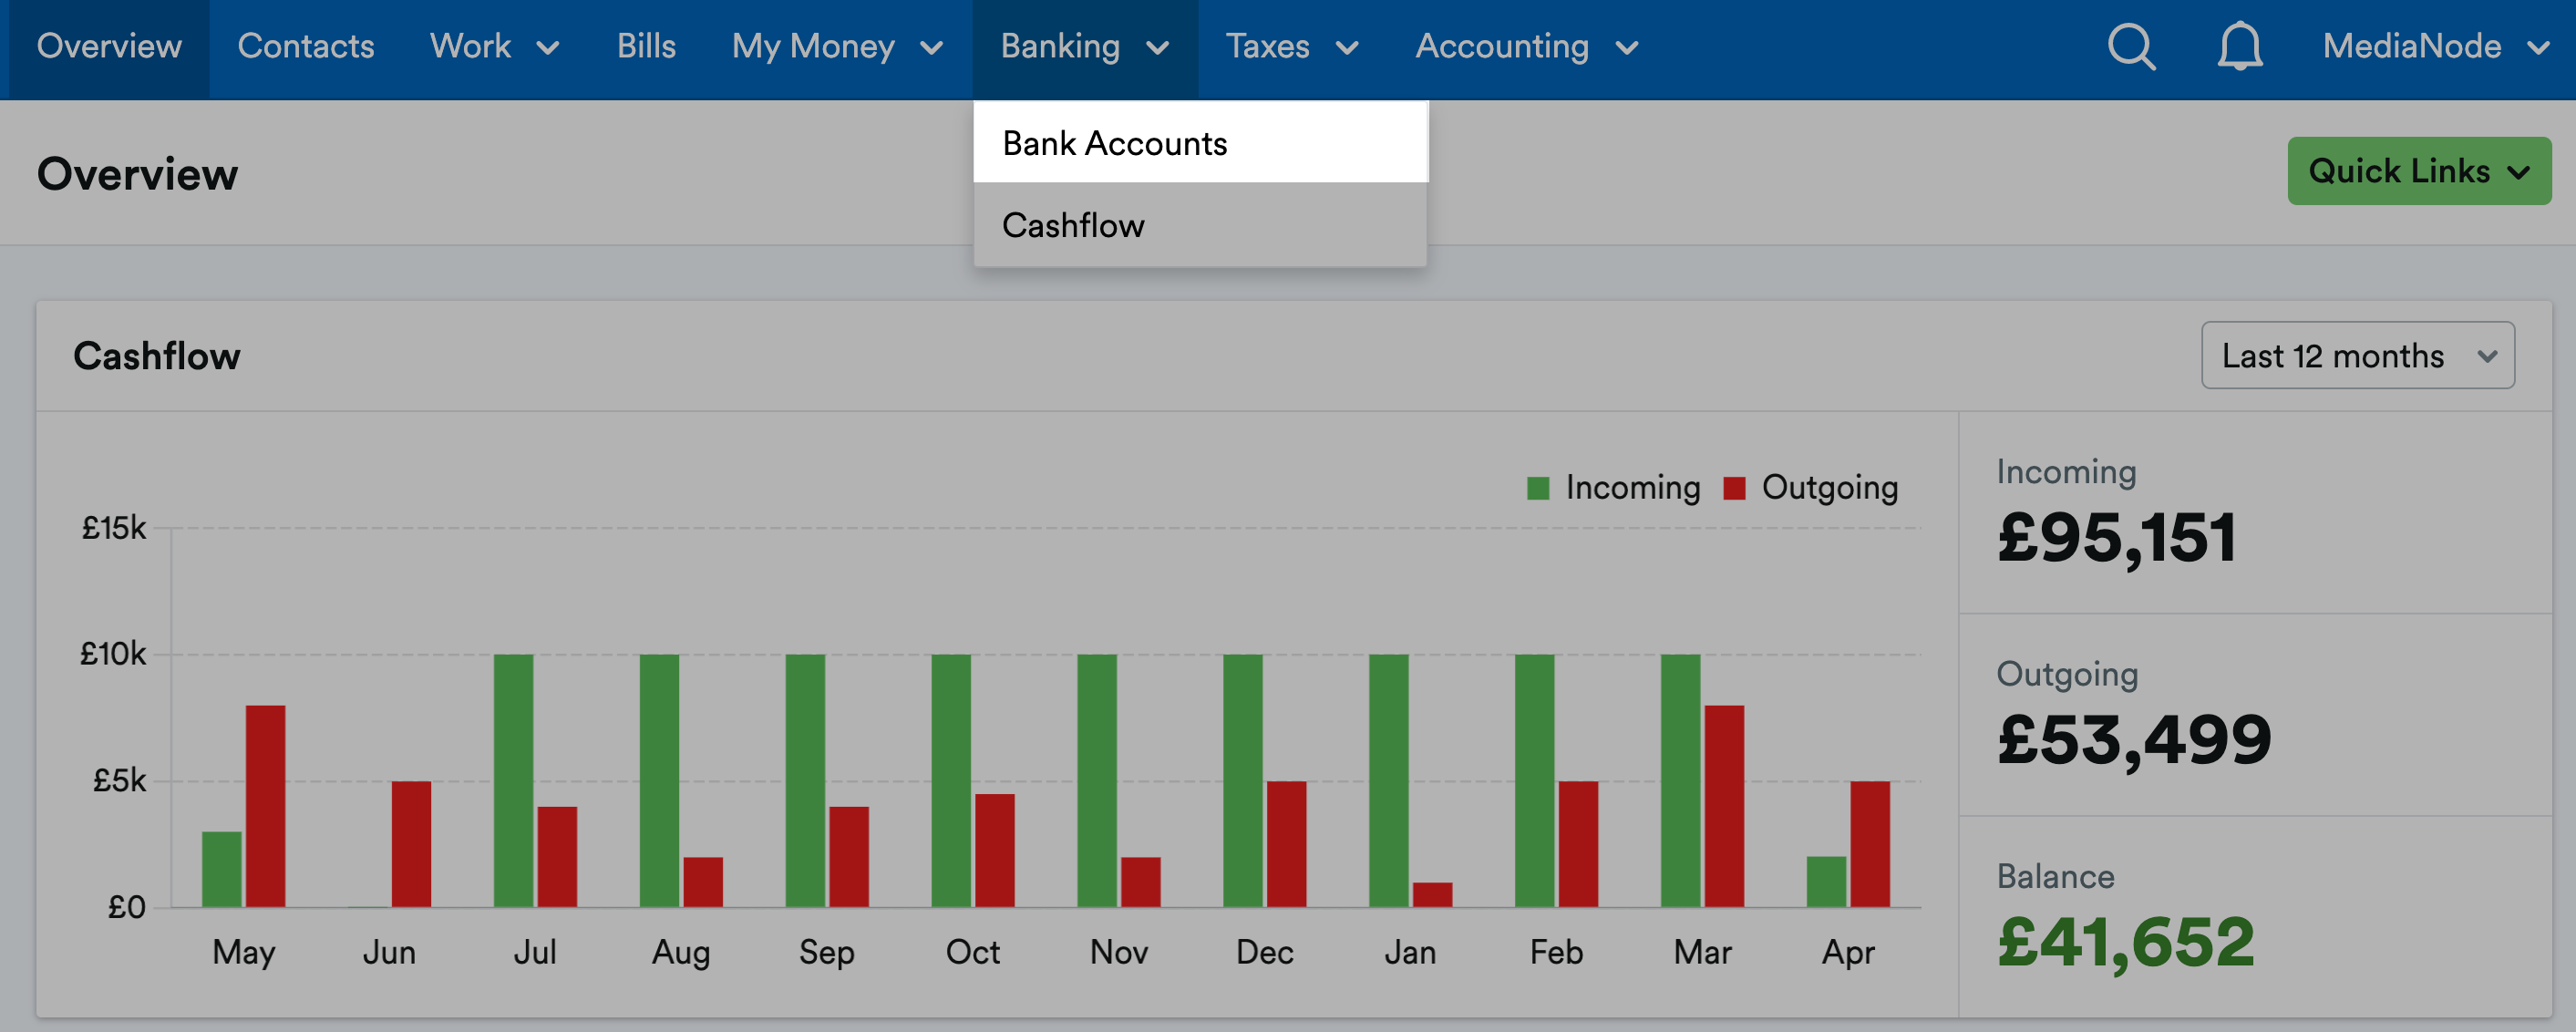 Screenshot showing the 'Banking' menu with 'Bank Accounts' highlighted